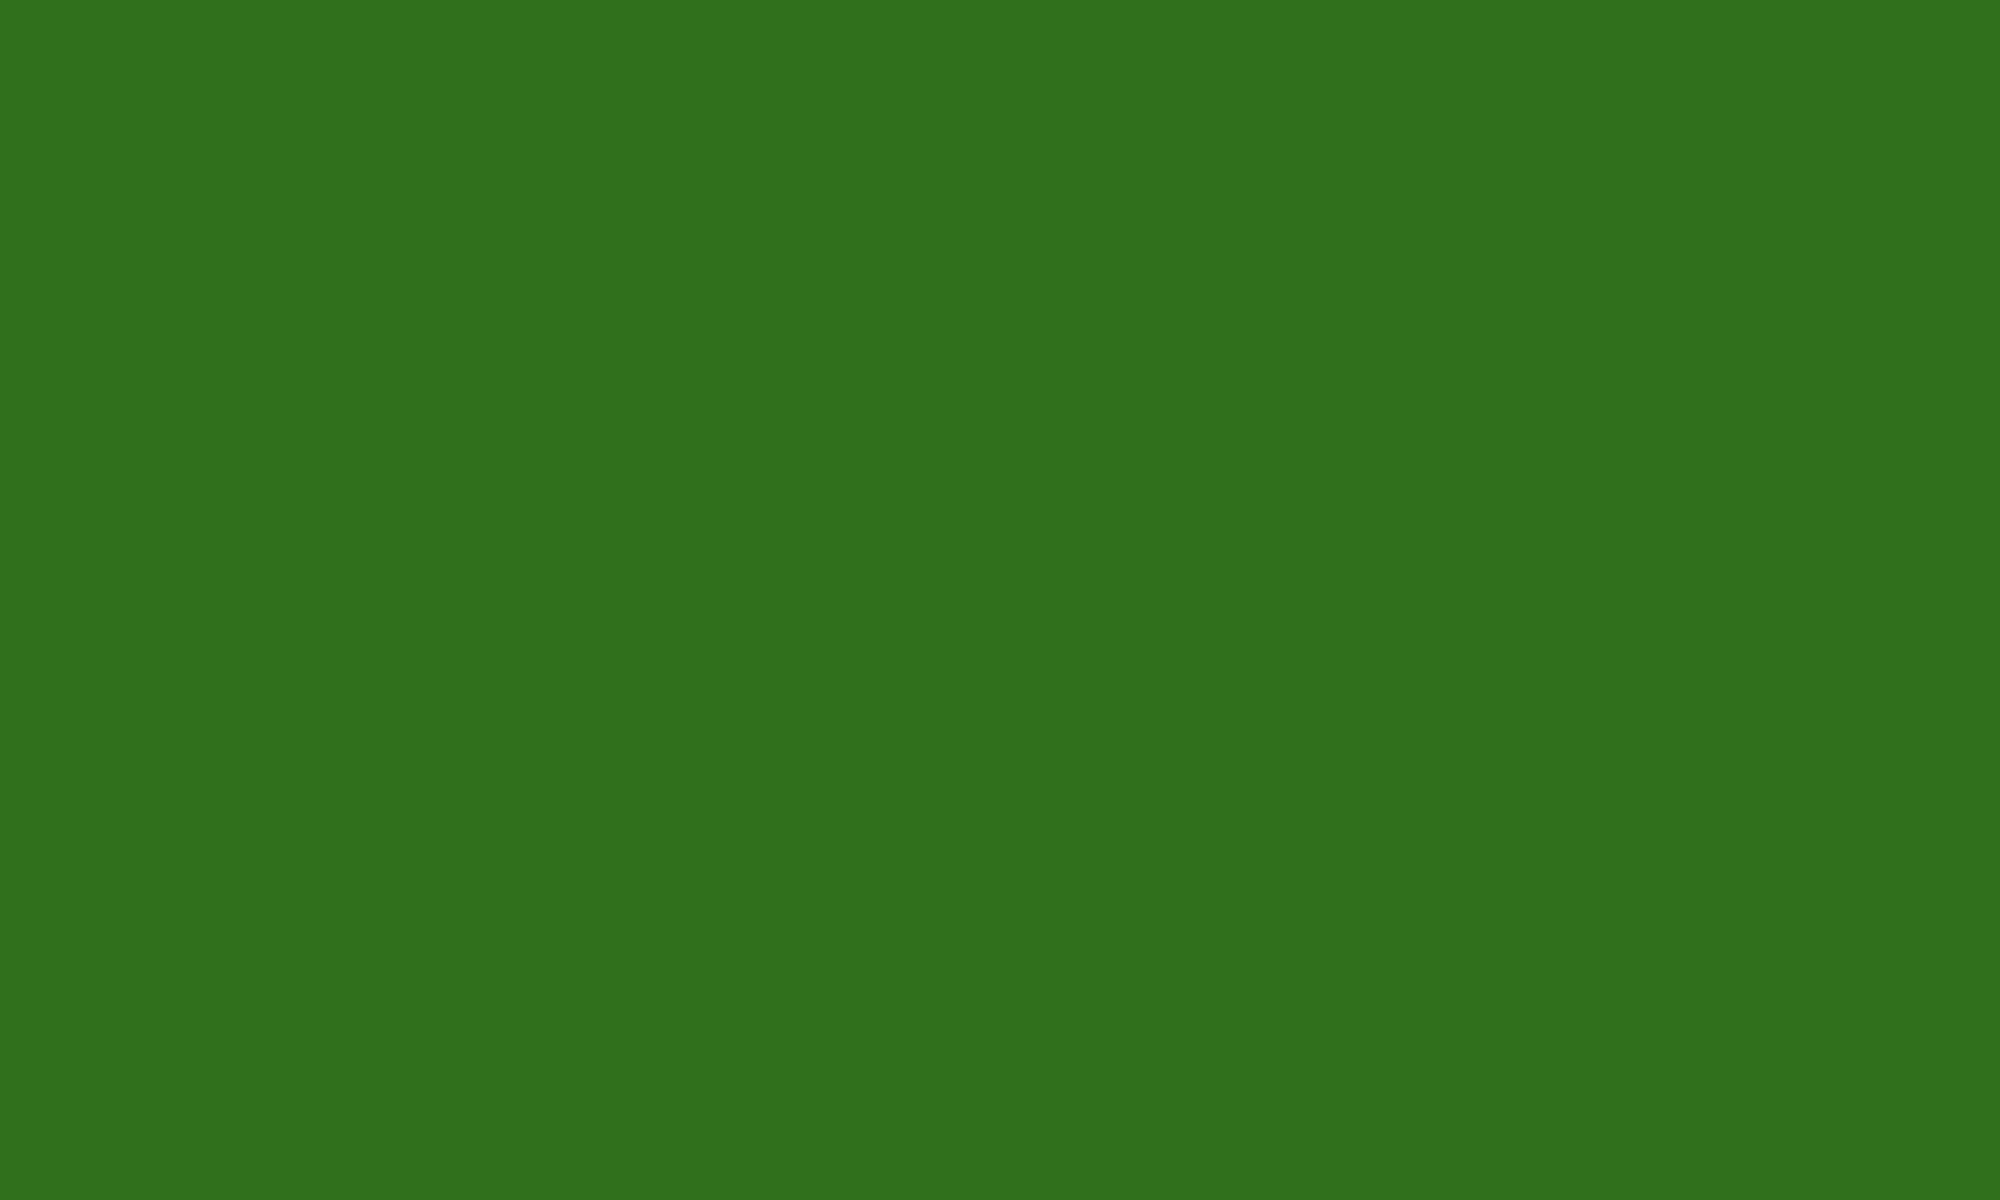 Green rectanlge